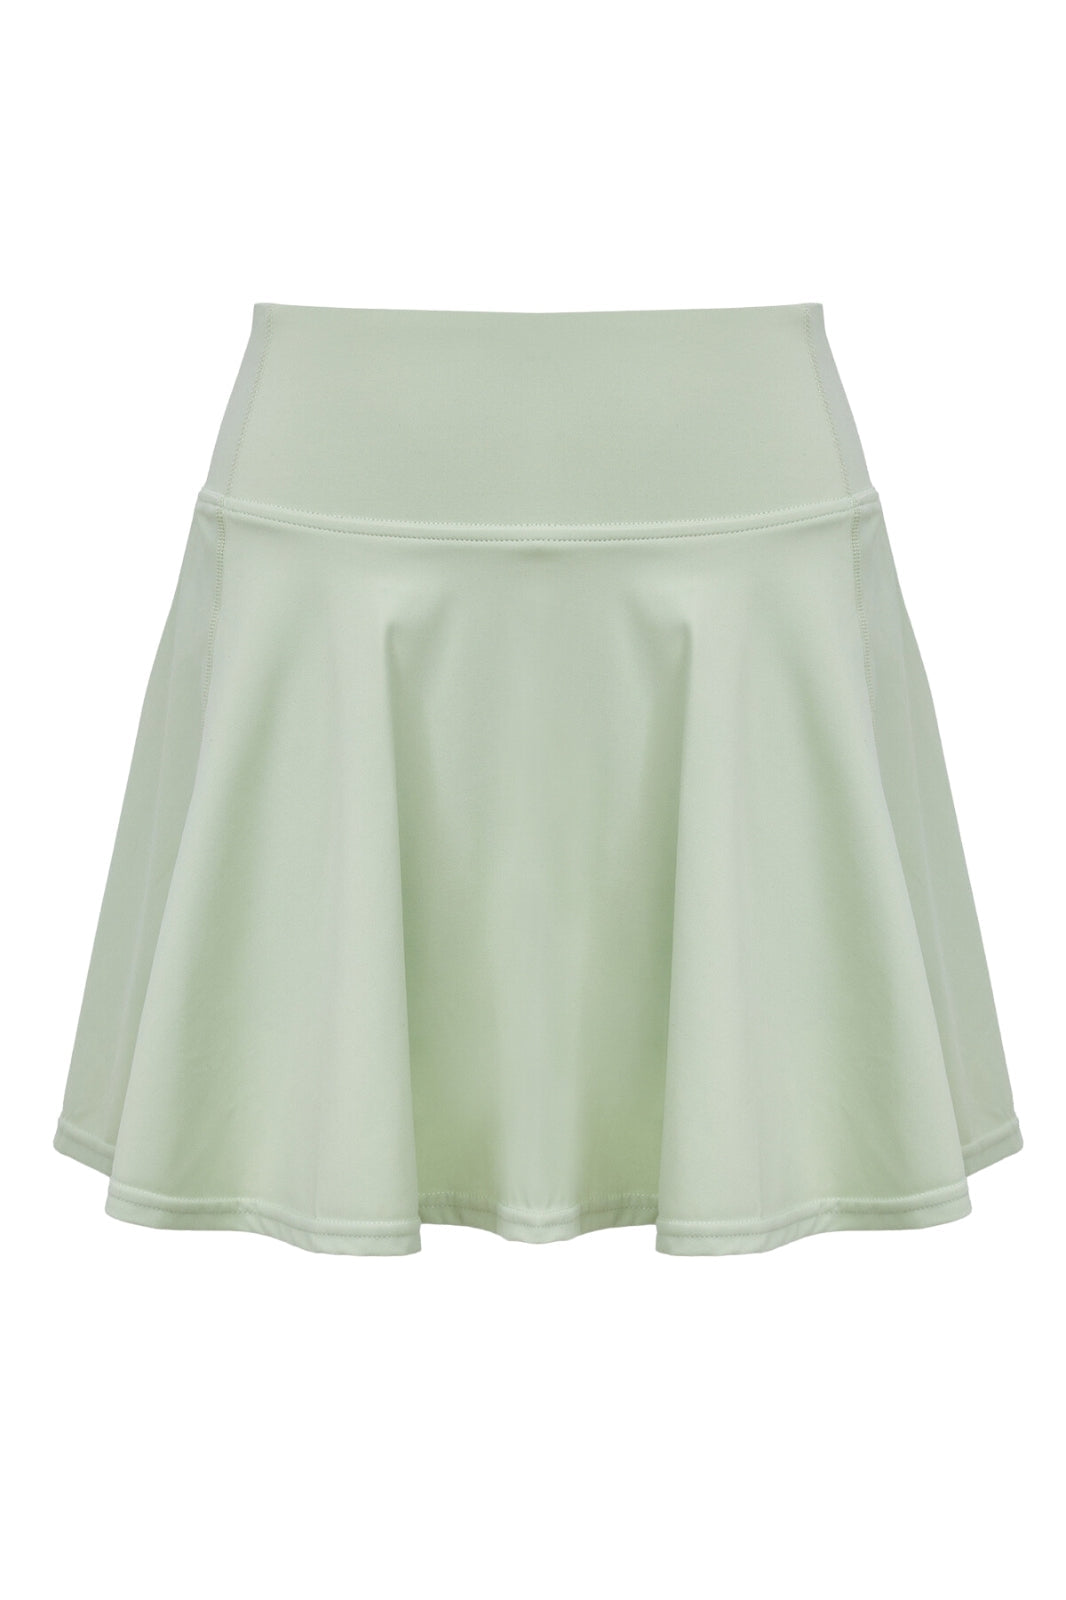 Leisure Tennis Skirt in Matcha (3 XS LEFT)